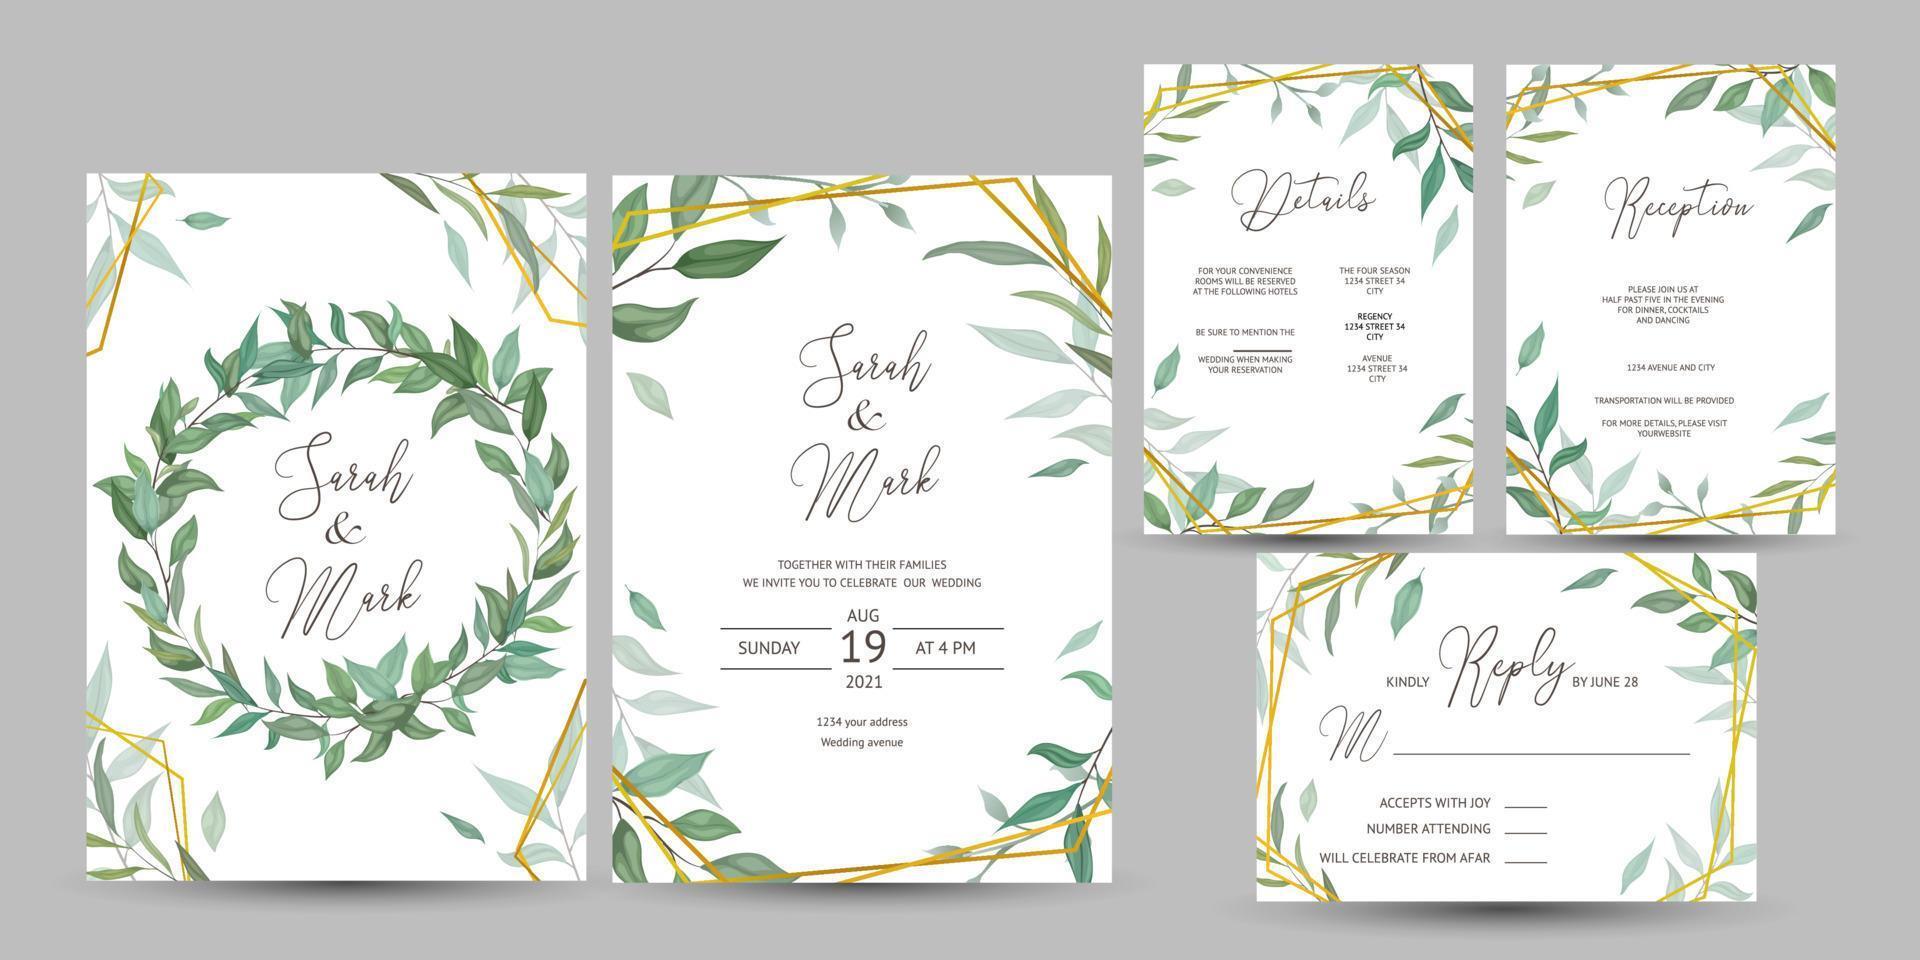 wedding invitation or greeting cards background design. vector